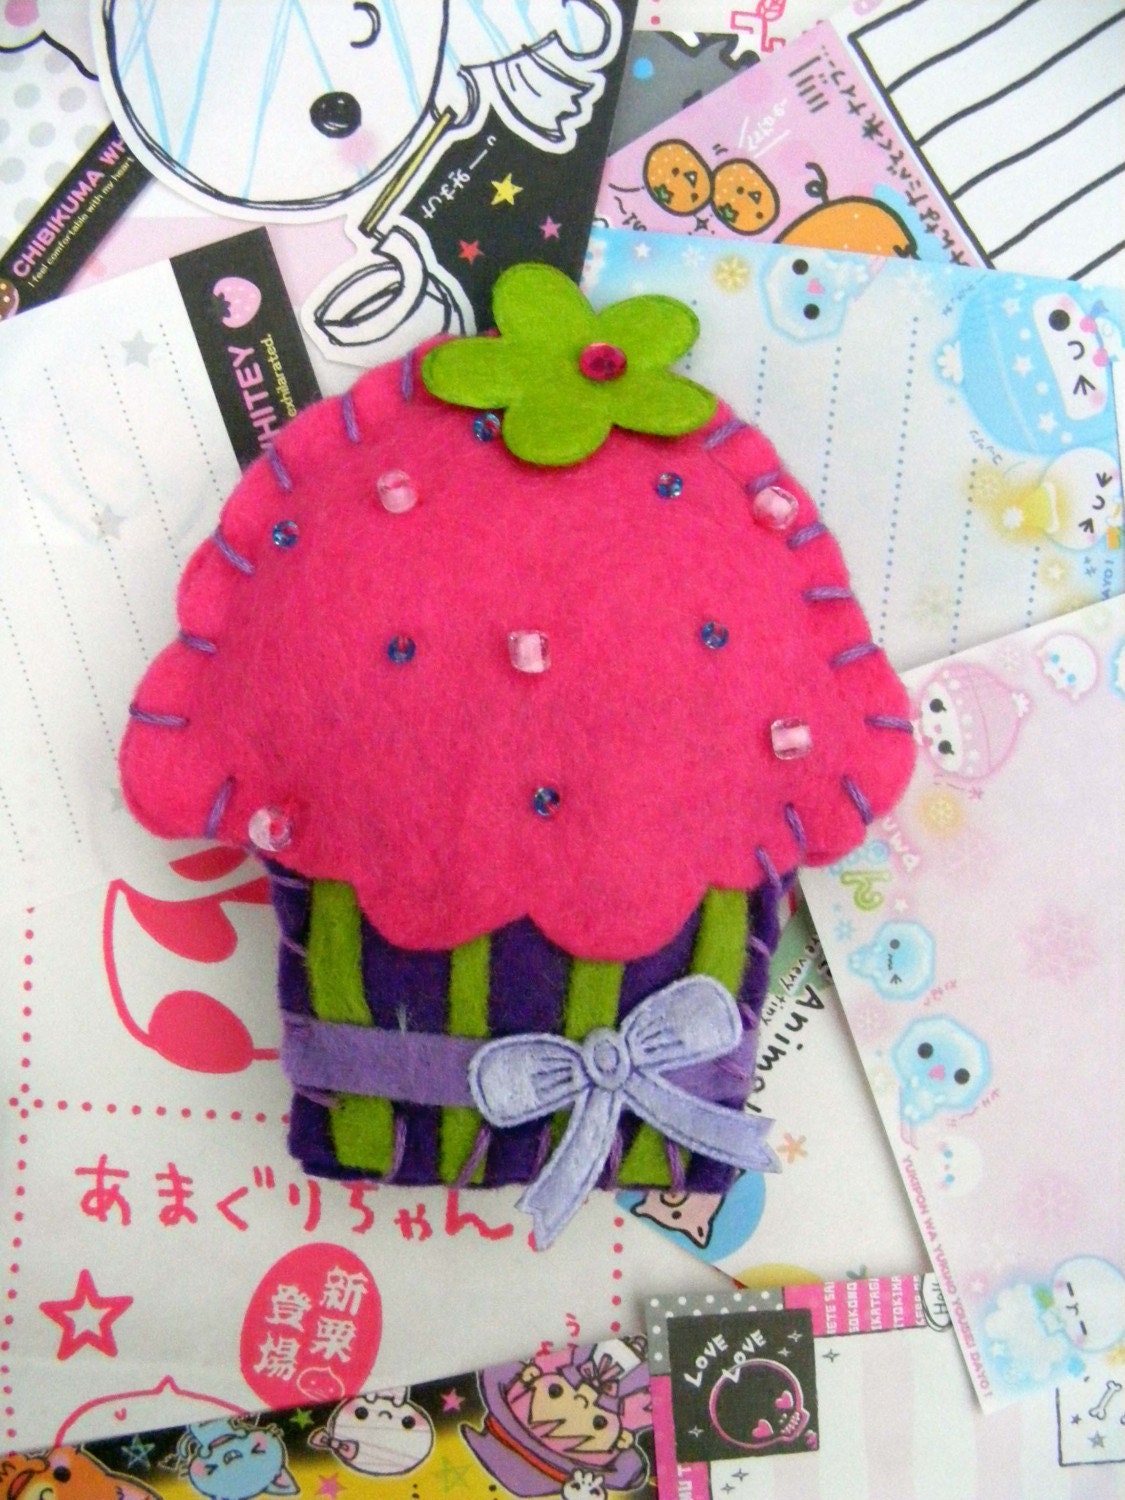 Cutie cupcake felt brooch in pink